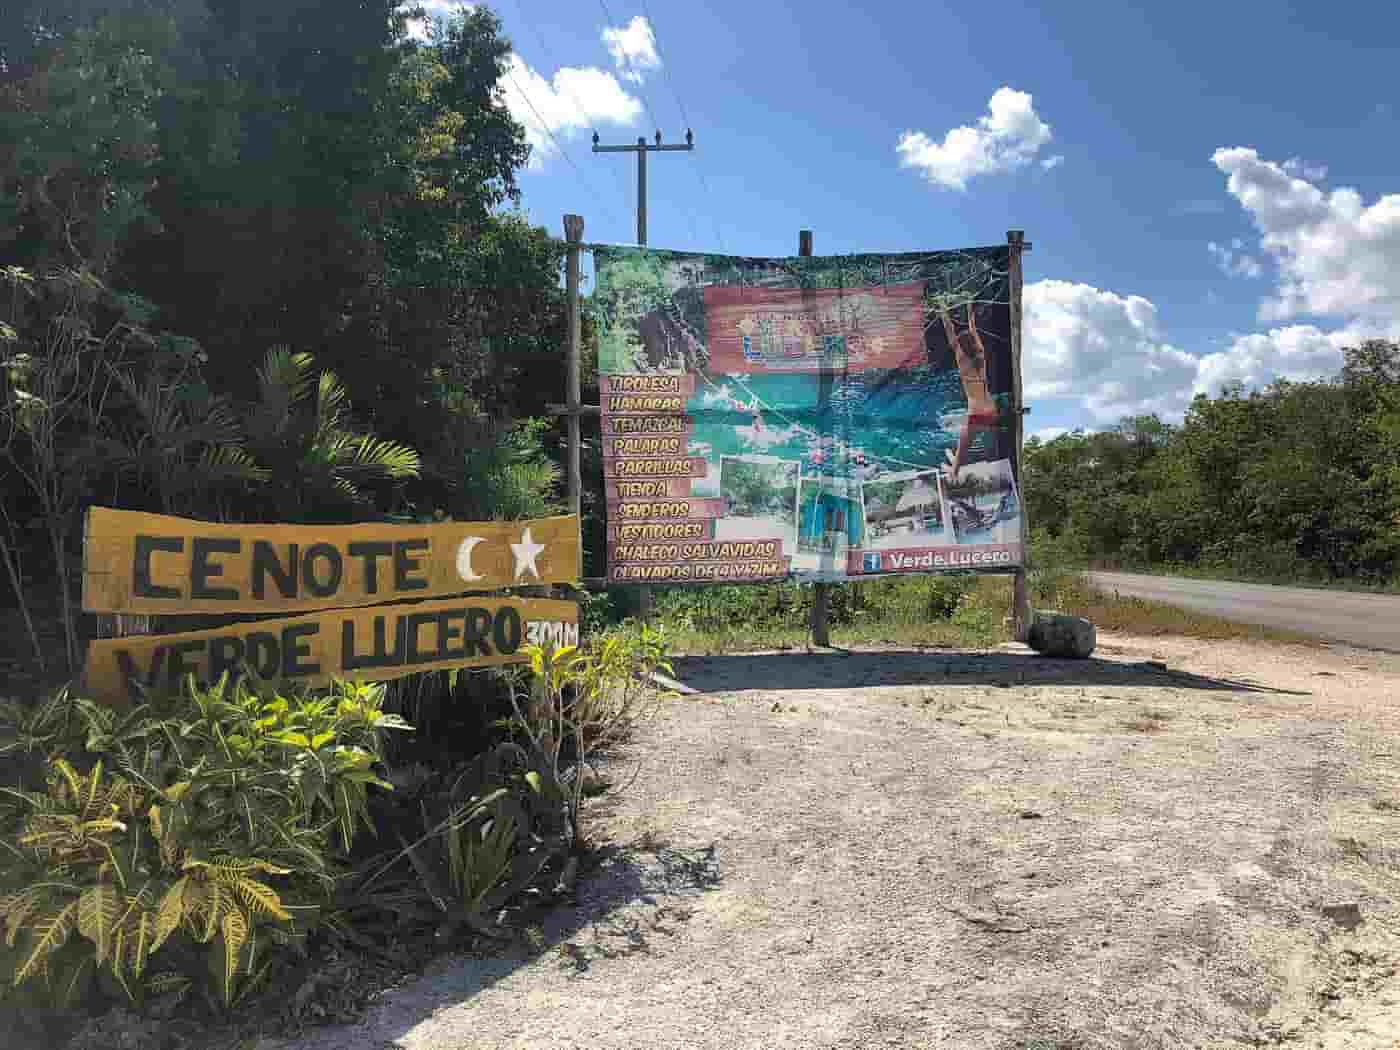 Cenote Verde Lucero road sign